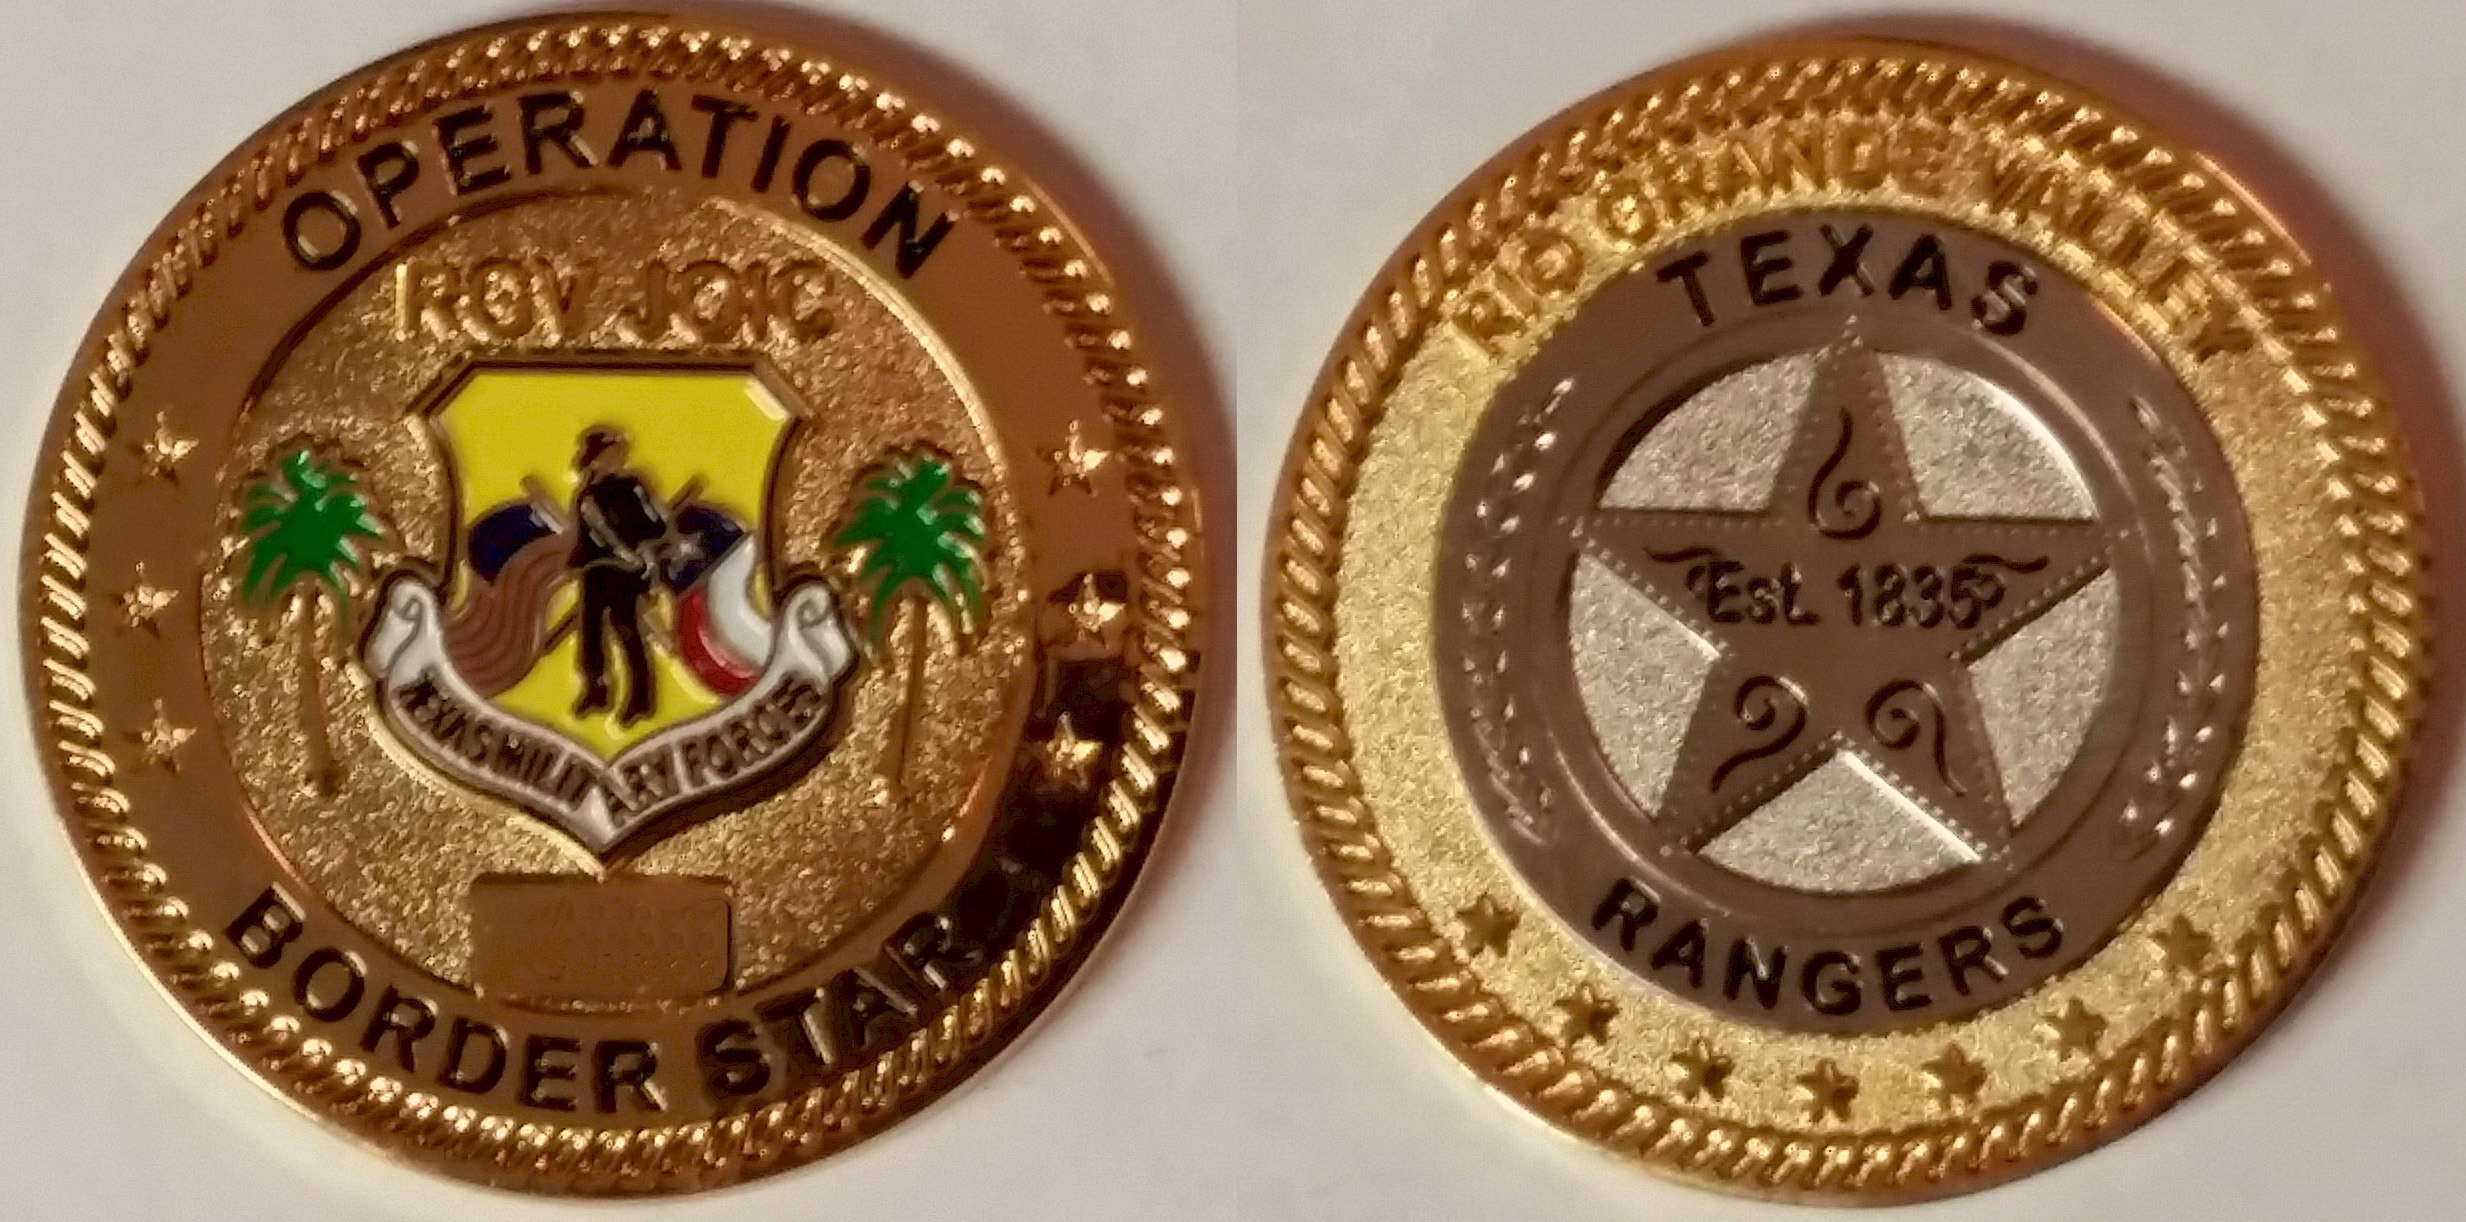 Operation Borderstar RGV - Texas Rangers